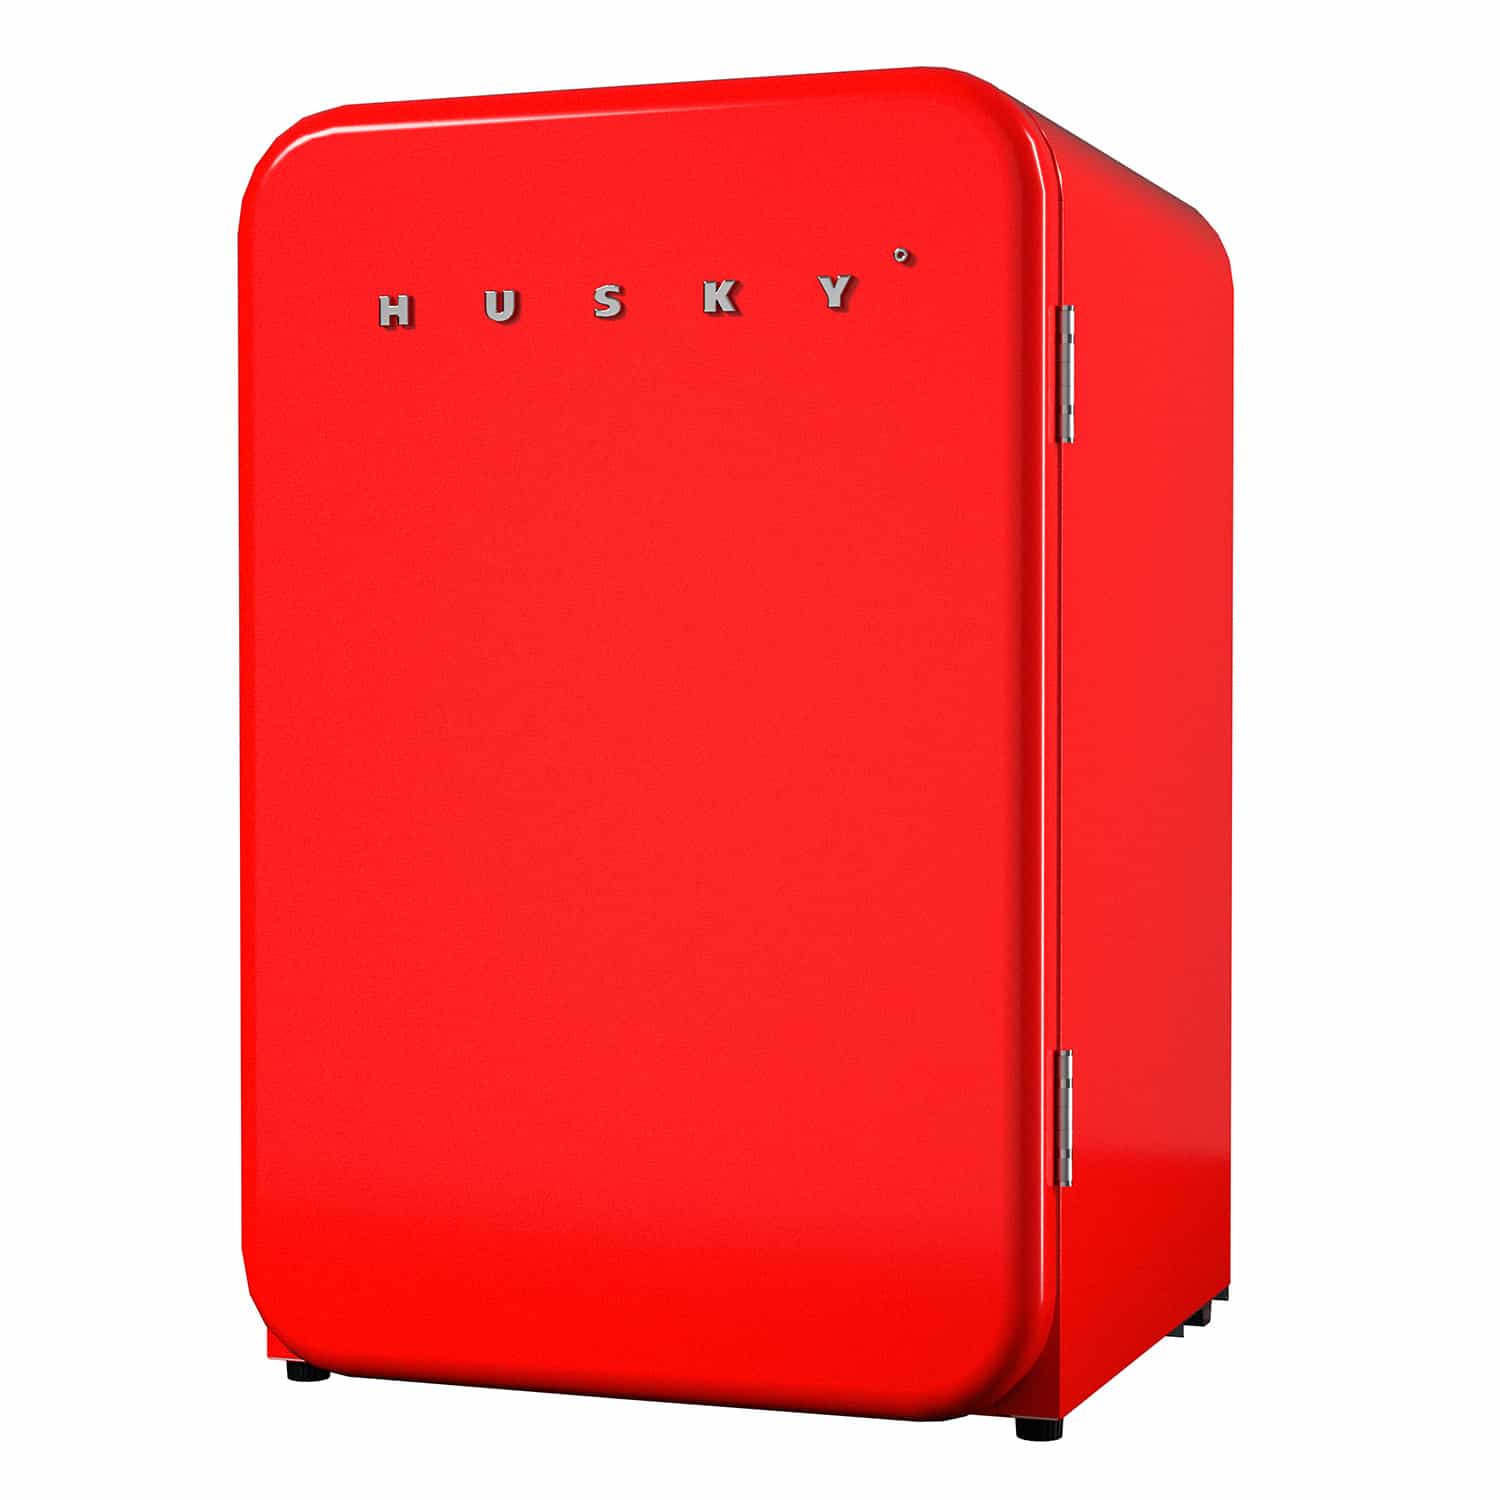 Husky 106L Retro Style 3.74 C.ft. Under-Counter Freestanding Mini Fridge in RedHusky 106L Retro Style 3.74 C.ft. Under-Counter Freestanding Mini Fridge in Red